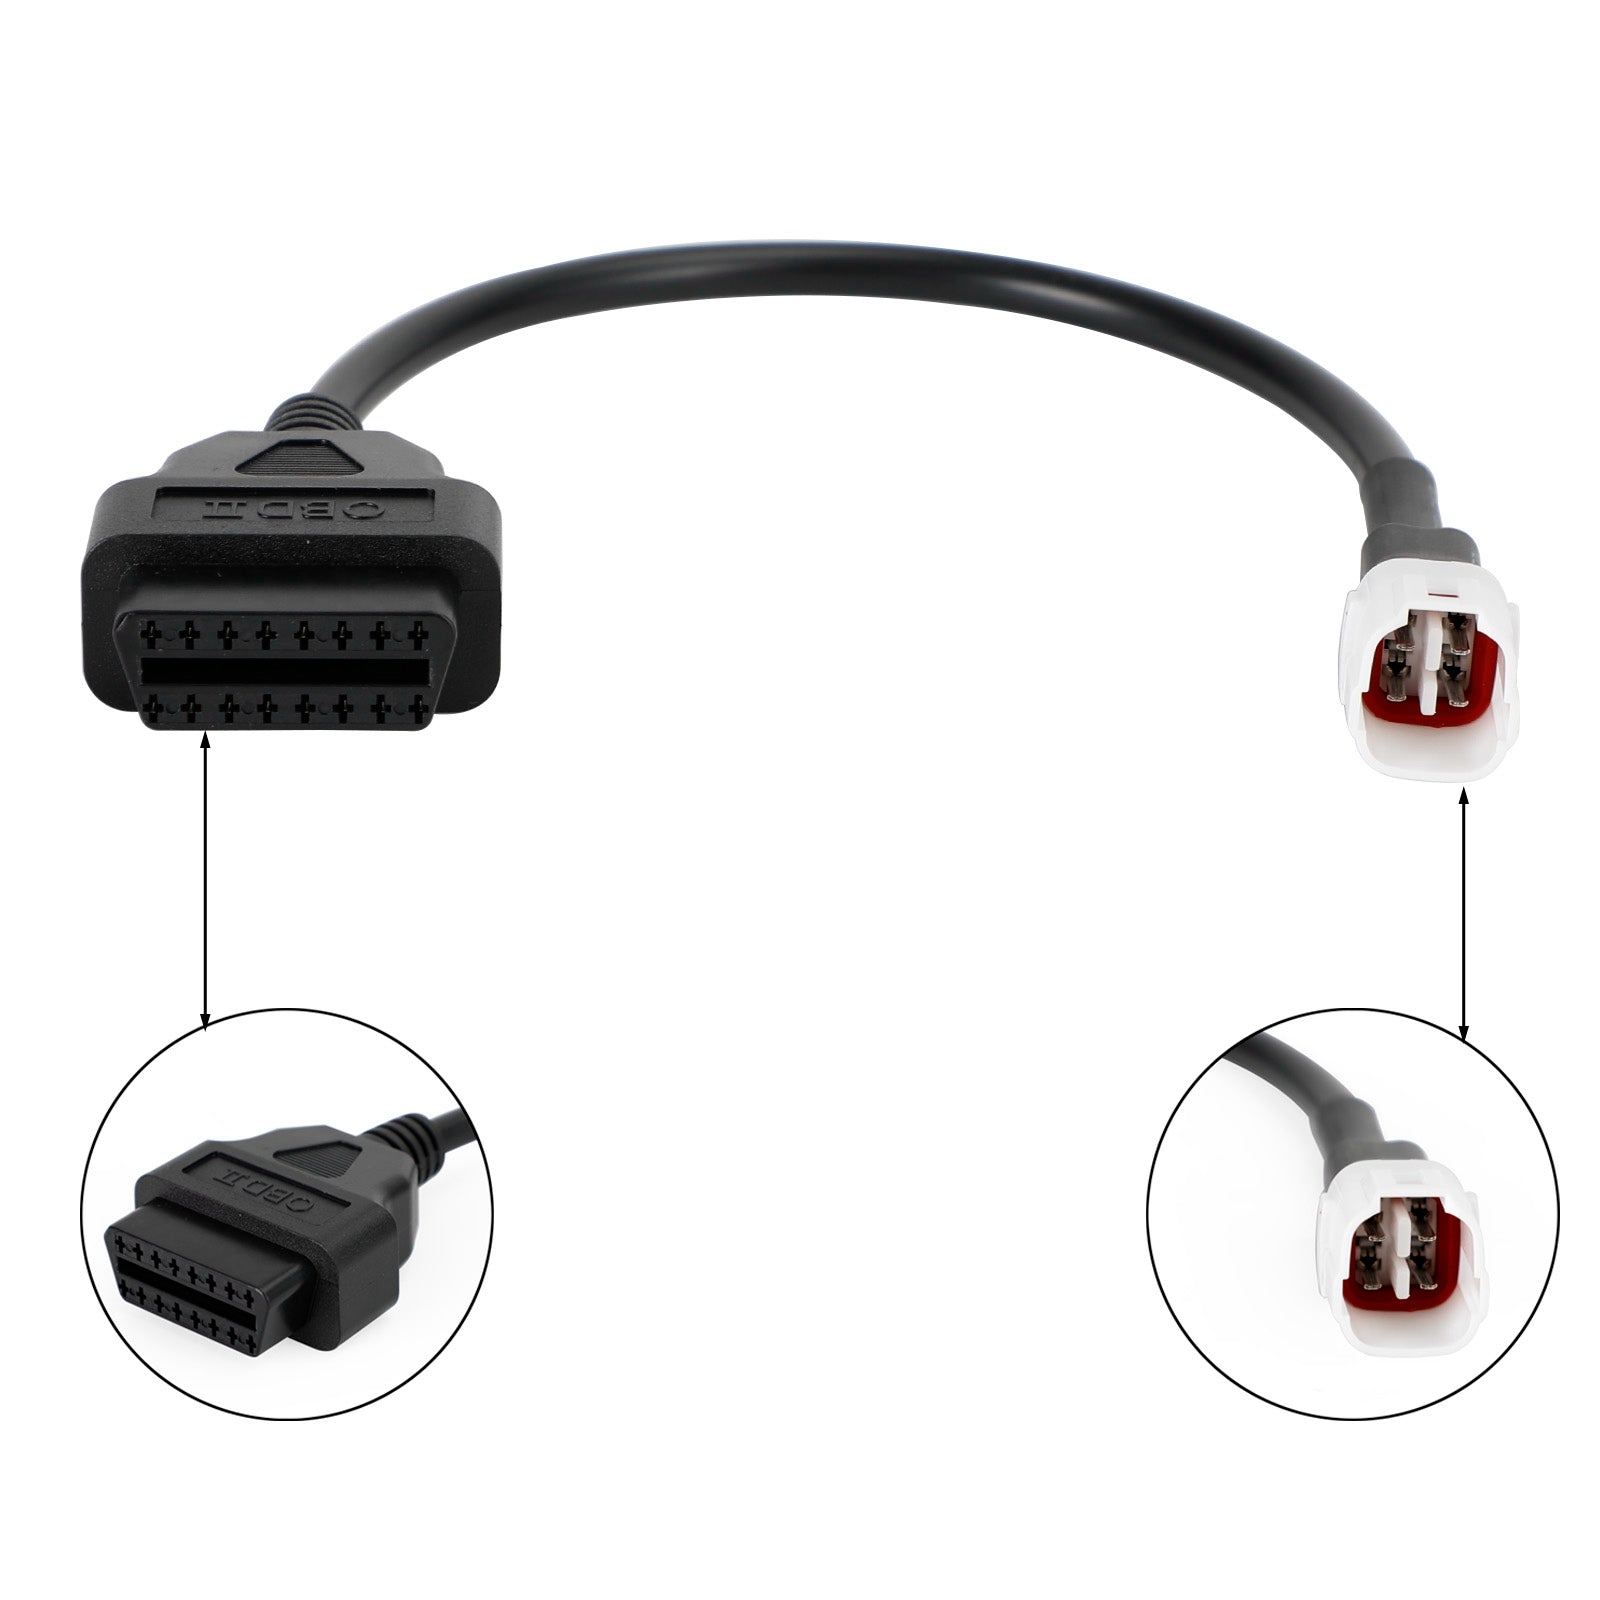 OBD2 to 4 Pin Diagnostic Adapter Cable Motorcycle Honda 4pin